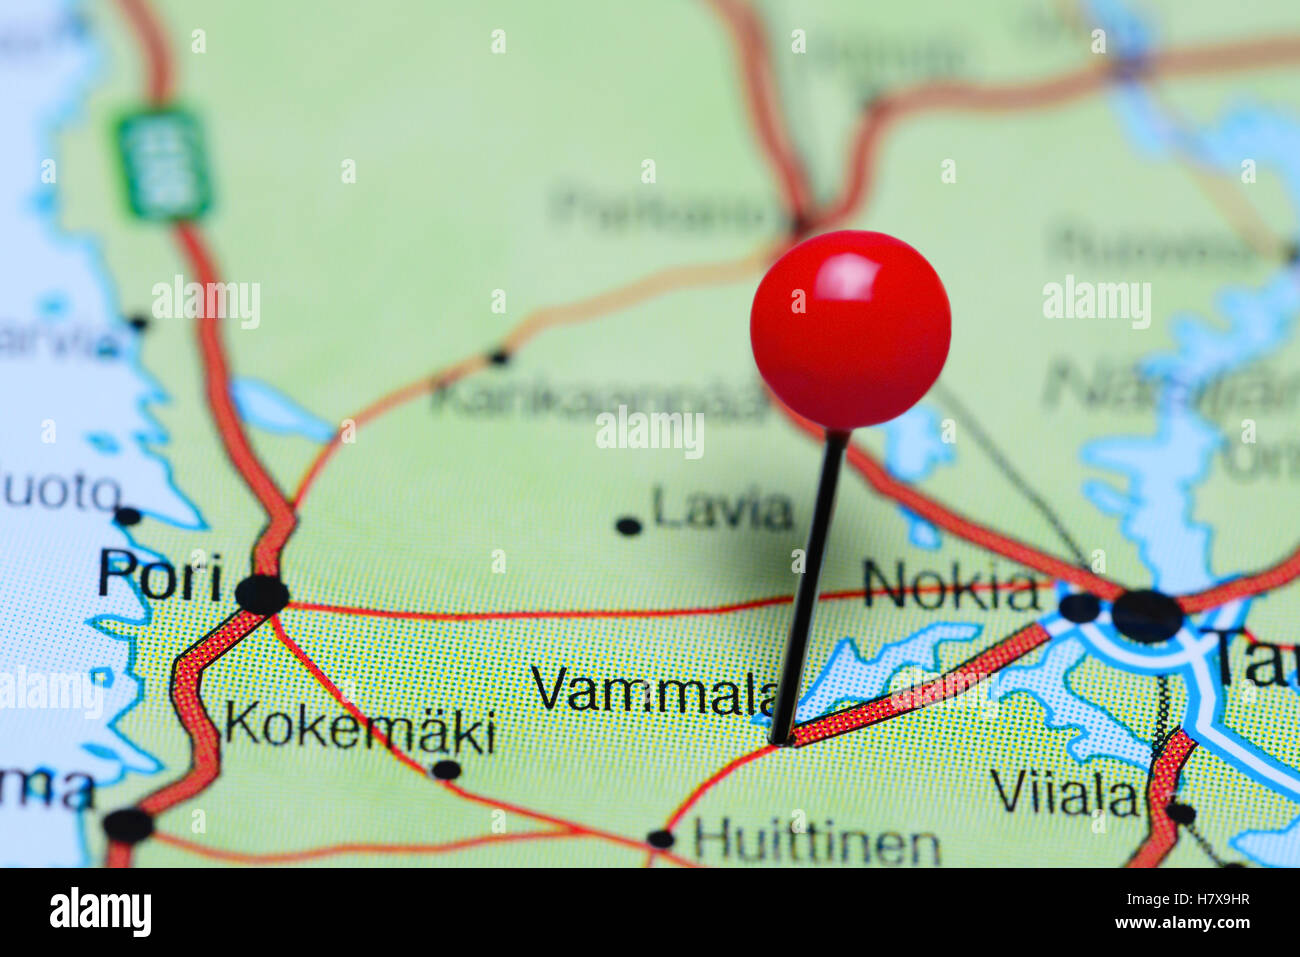 Vammala pinned on a map of Finland Stock Photo